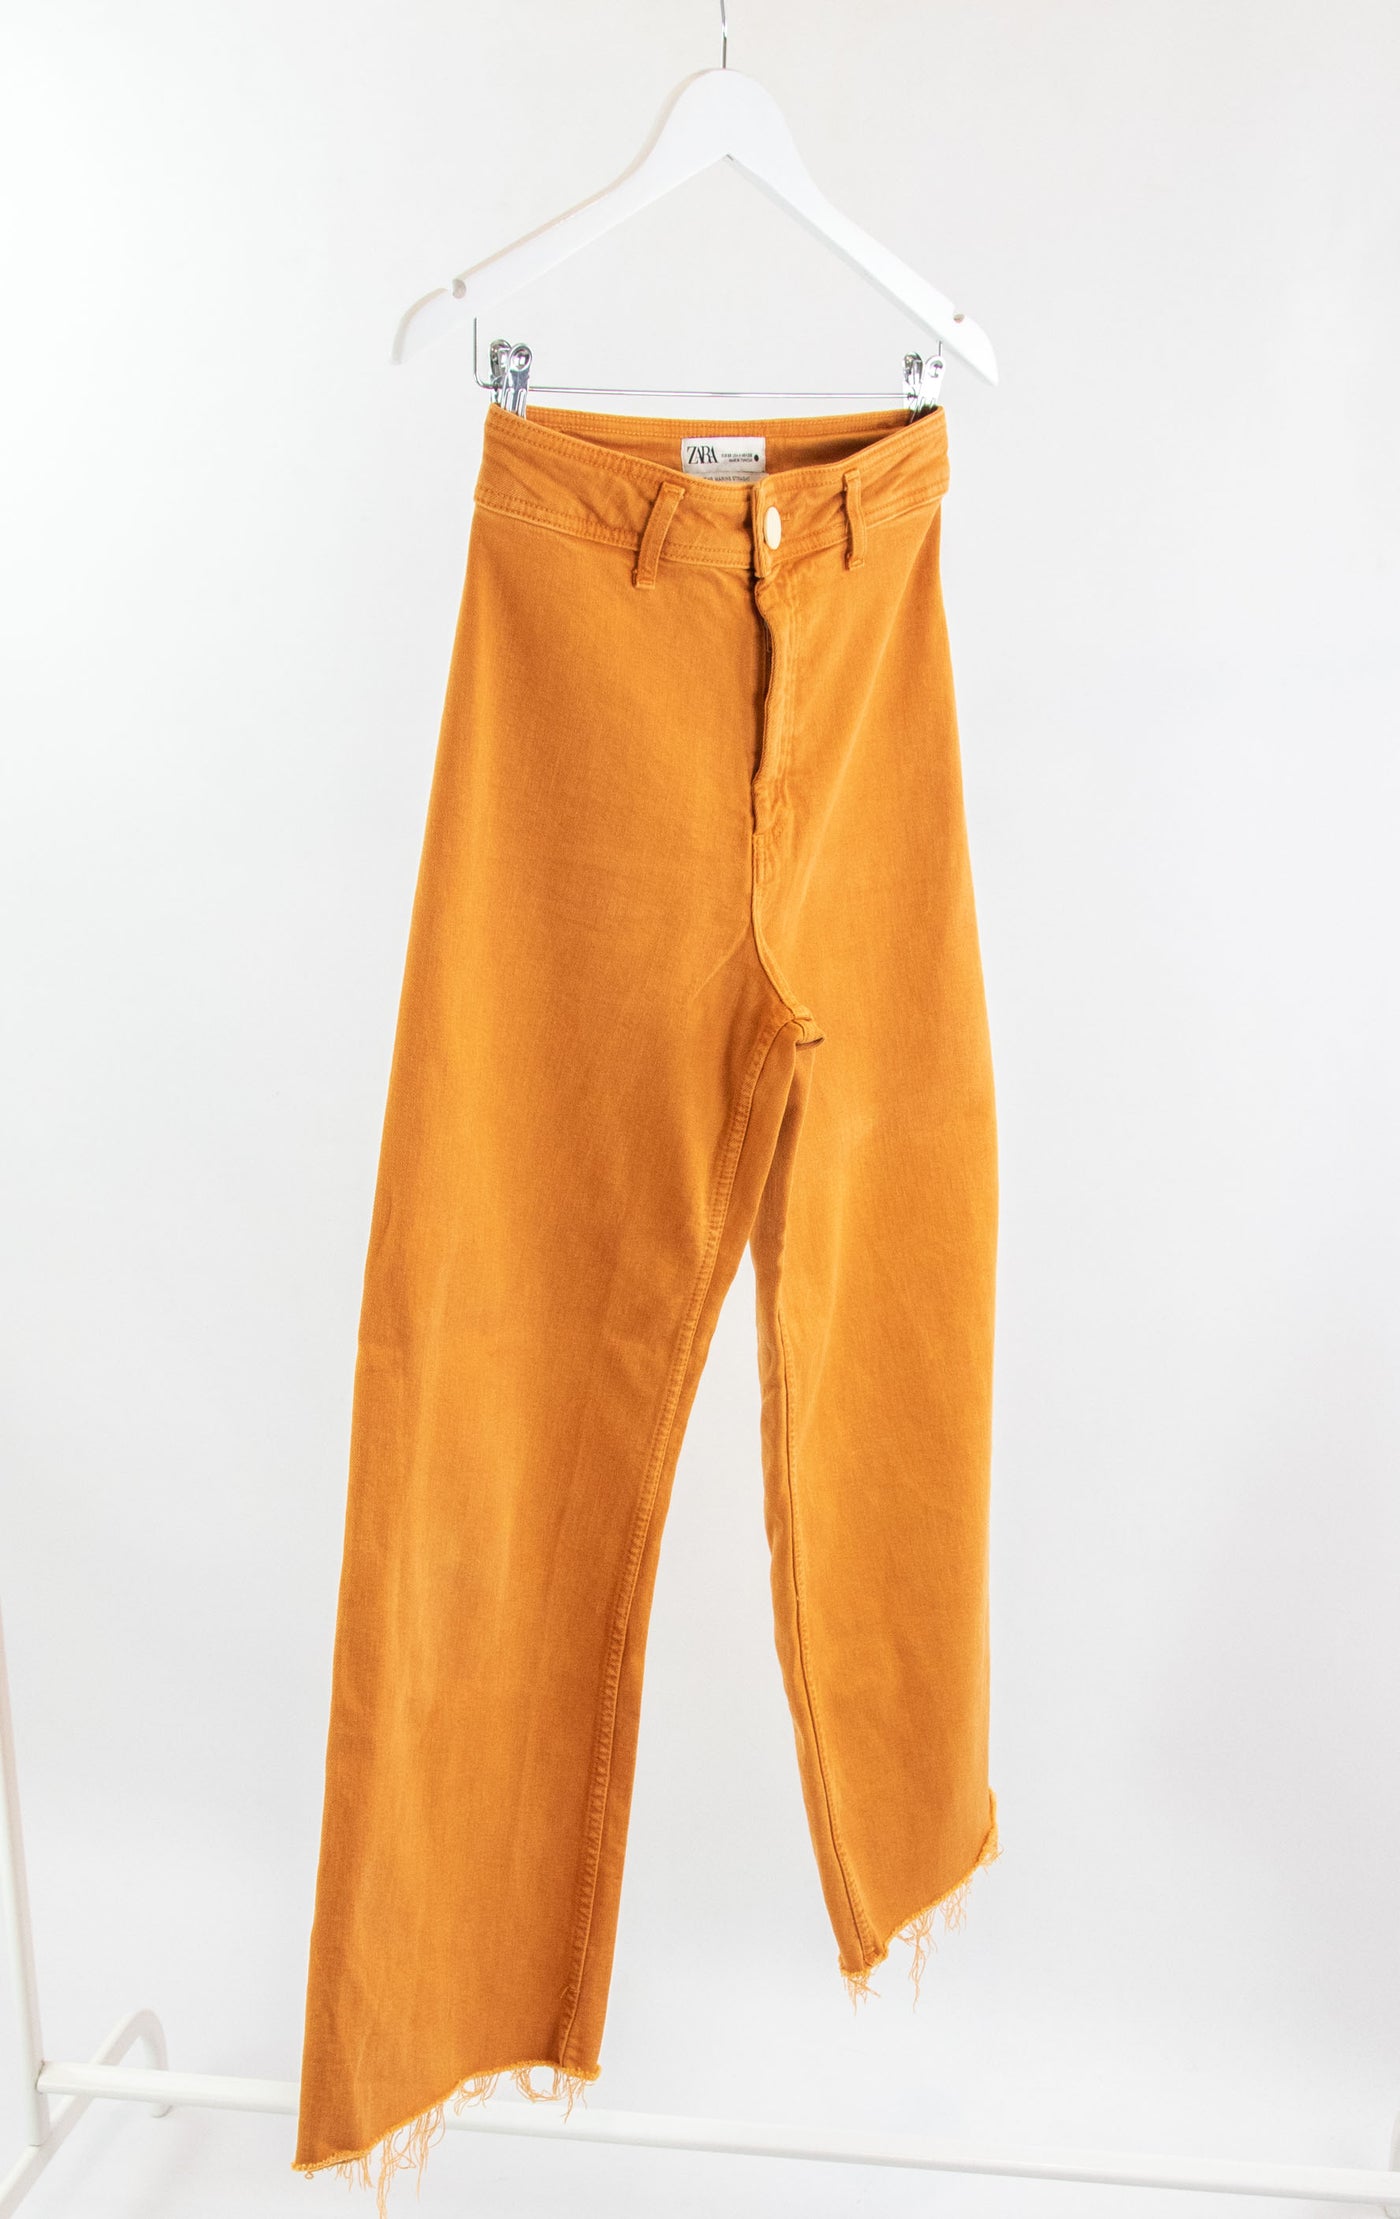 Jeans naranja